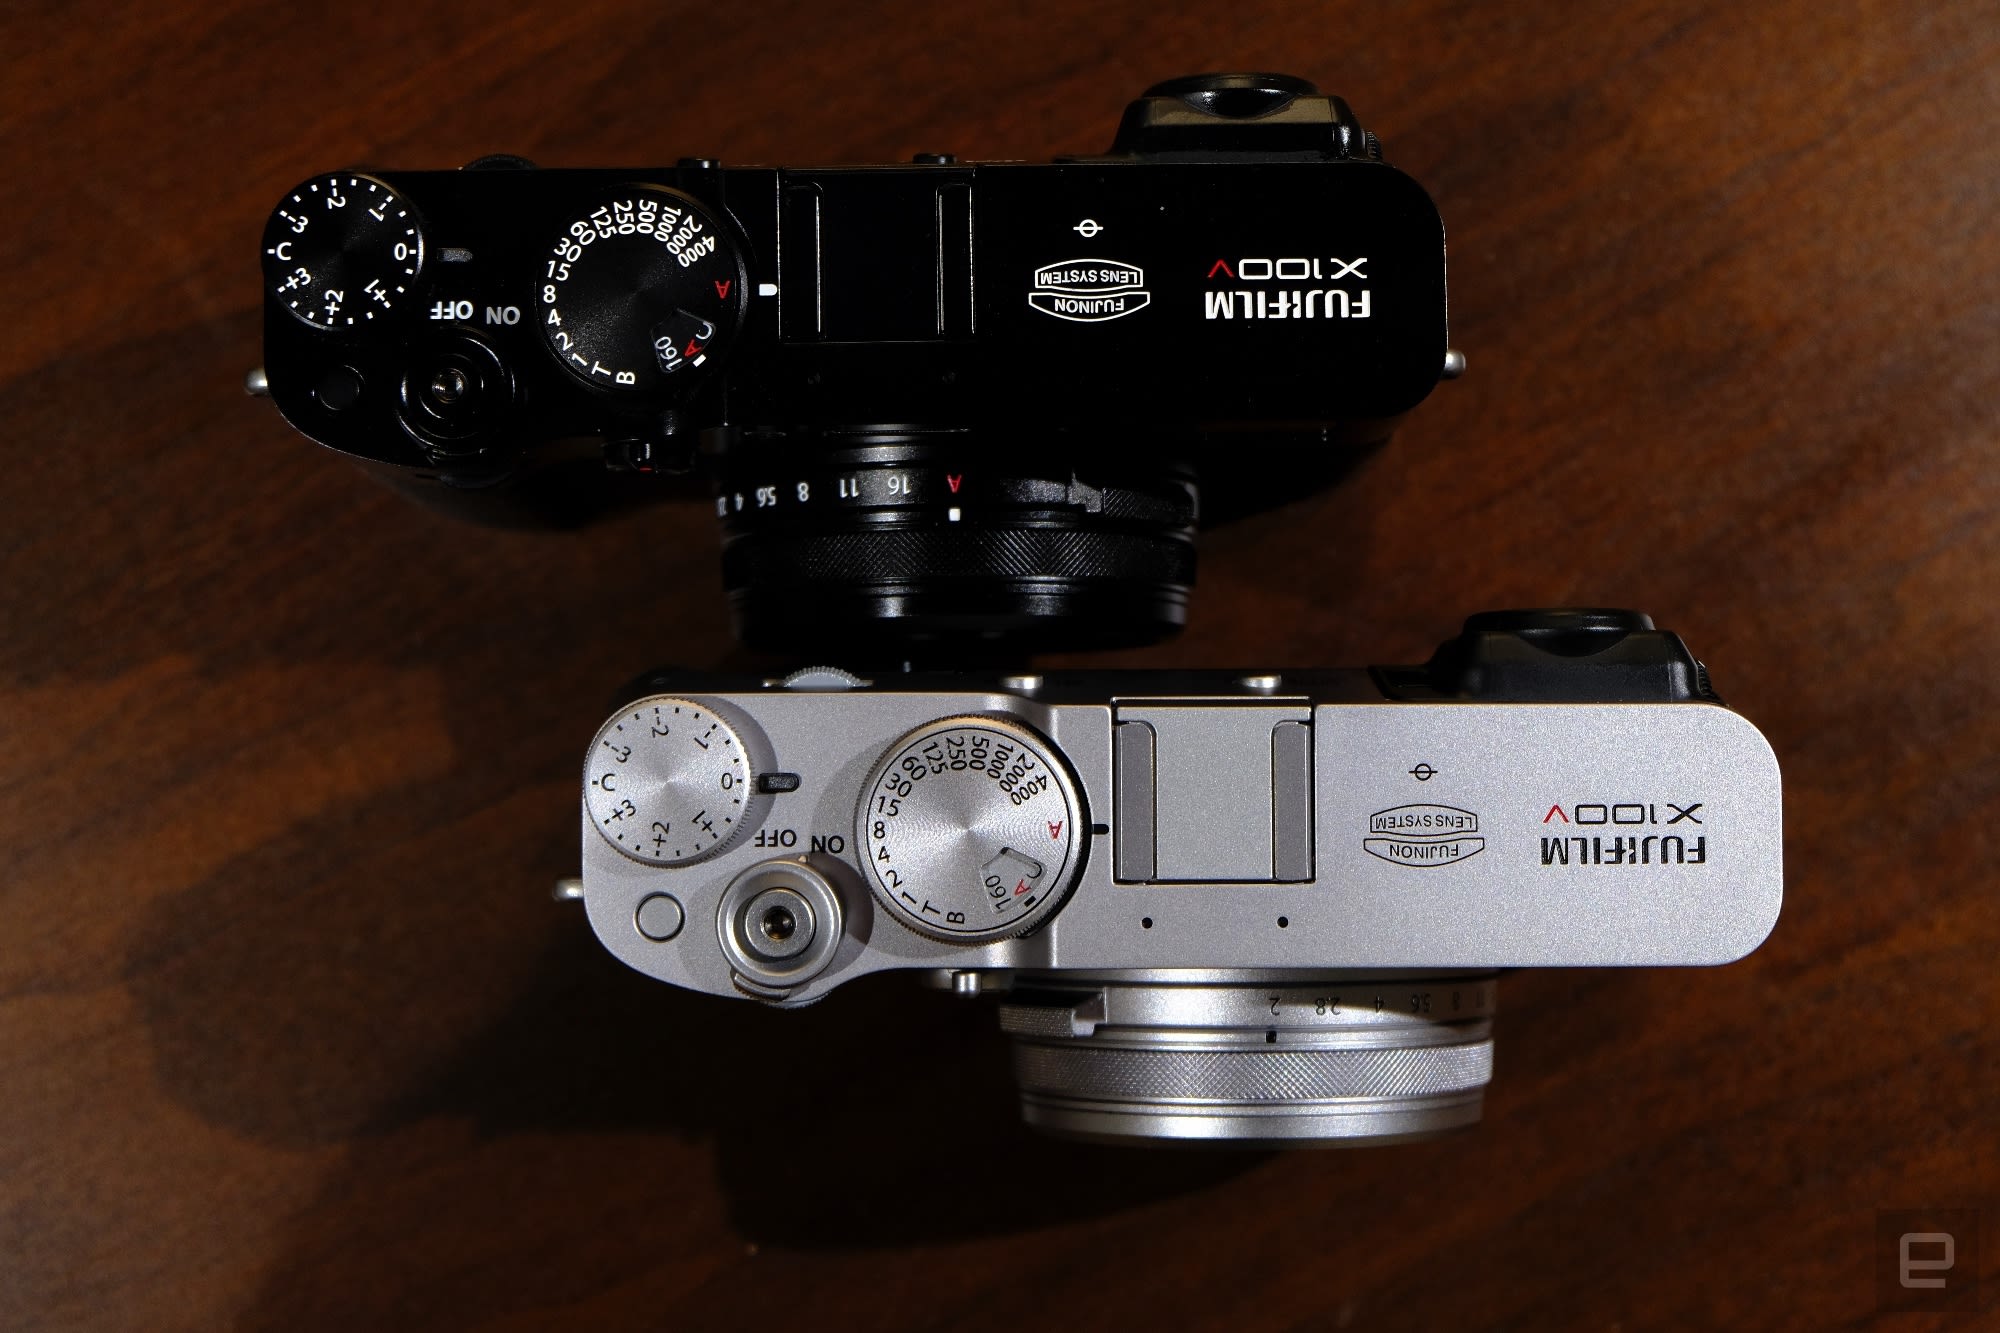 Fujifilm X100V compact street photography camera